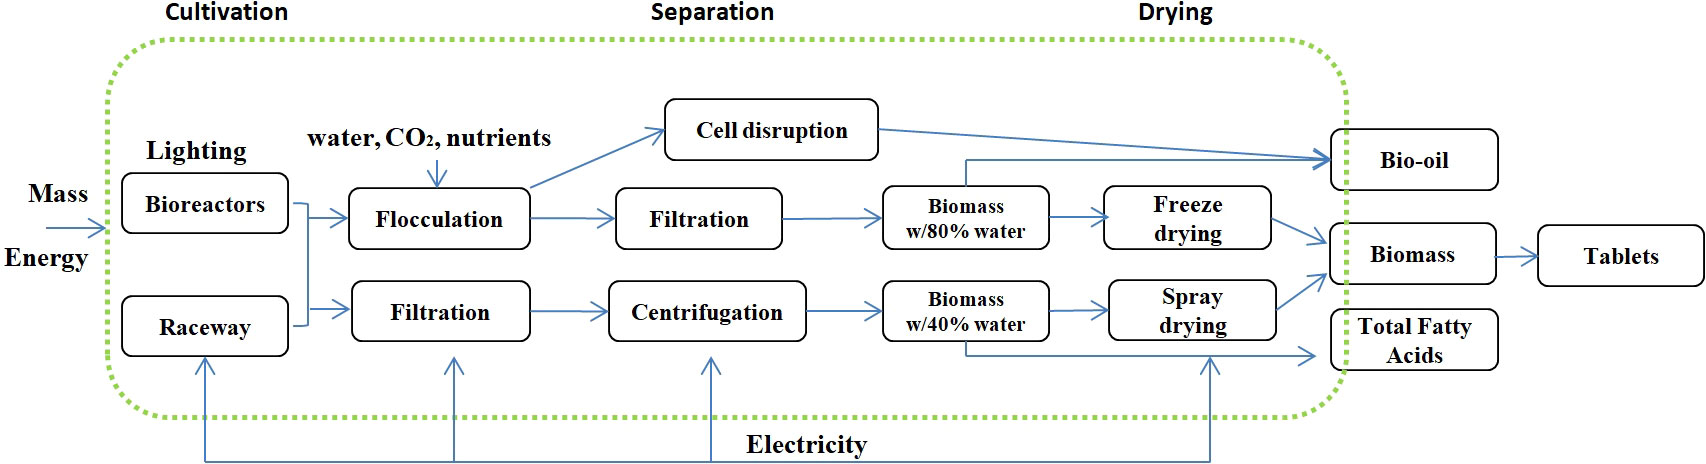 Environmental life cycle assessment of cascade valorisation strategies of  South African macroalga Ecklonia maxima using green extraction technologies  - ScienceDirect